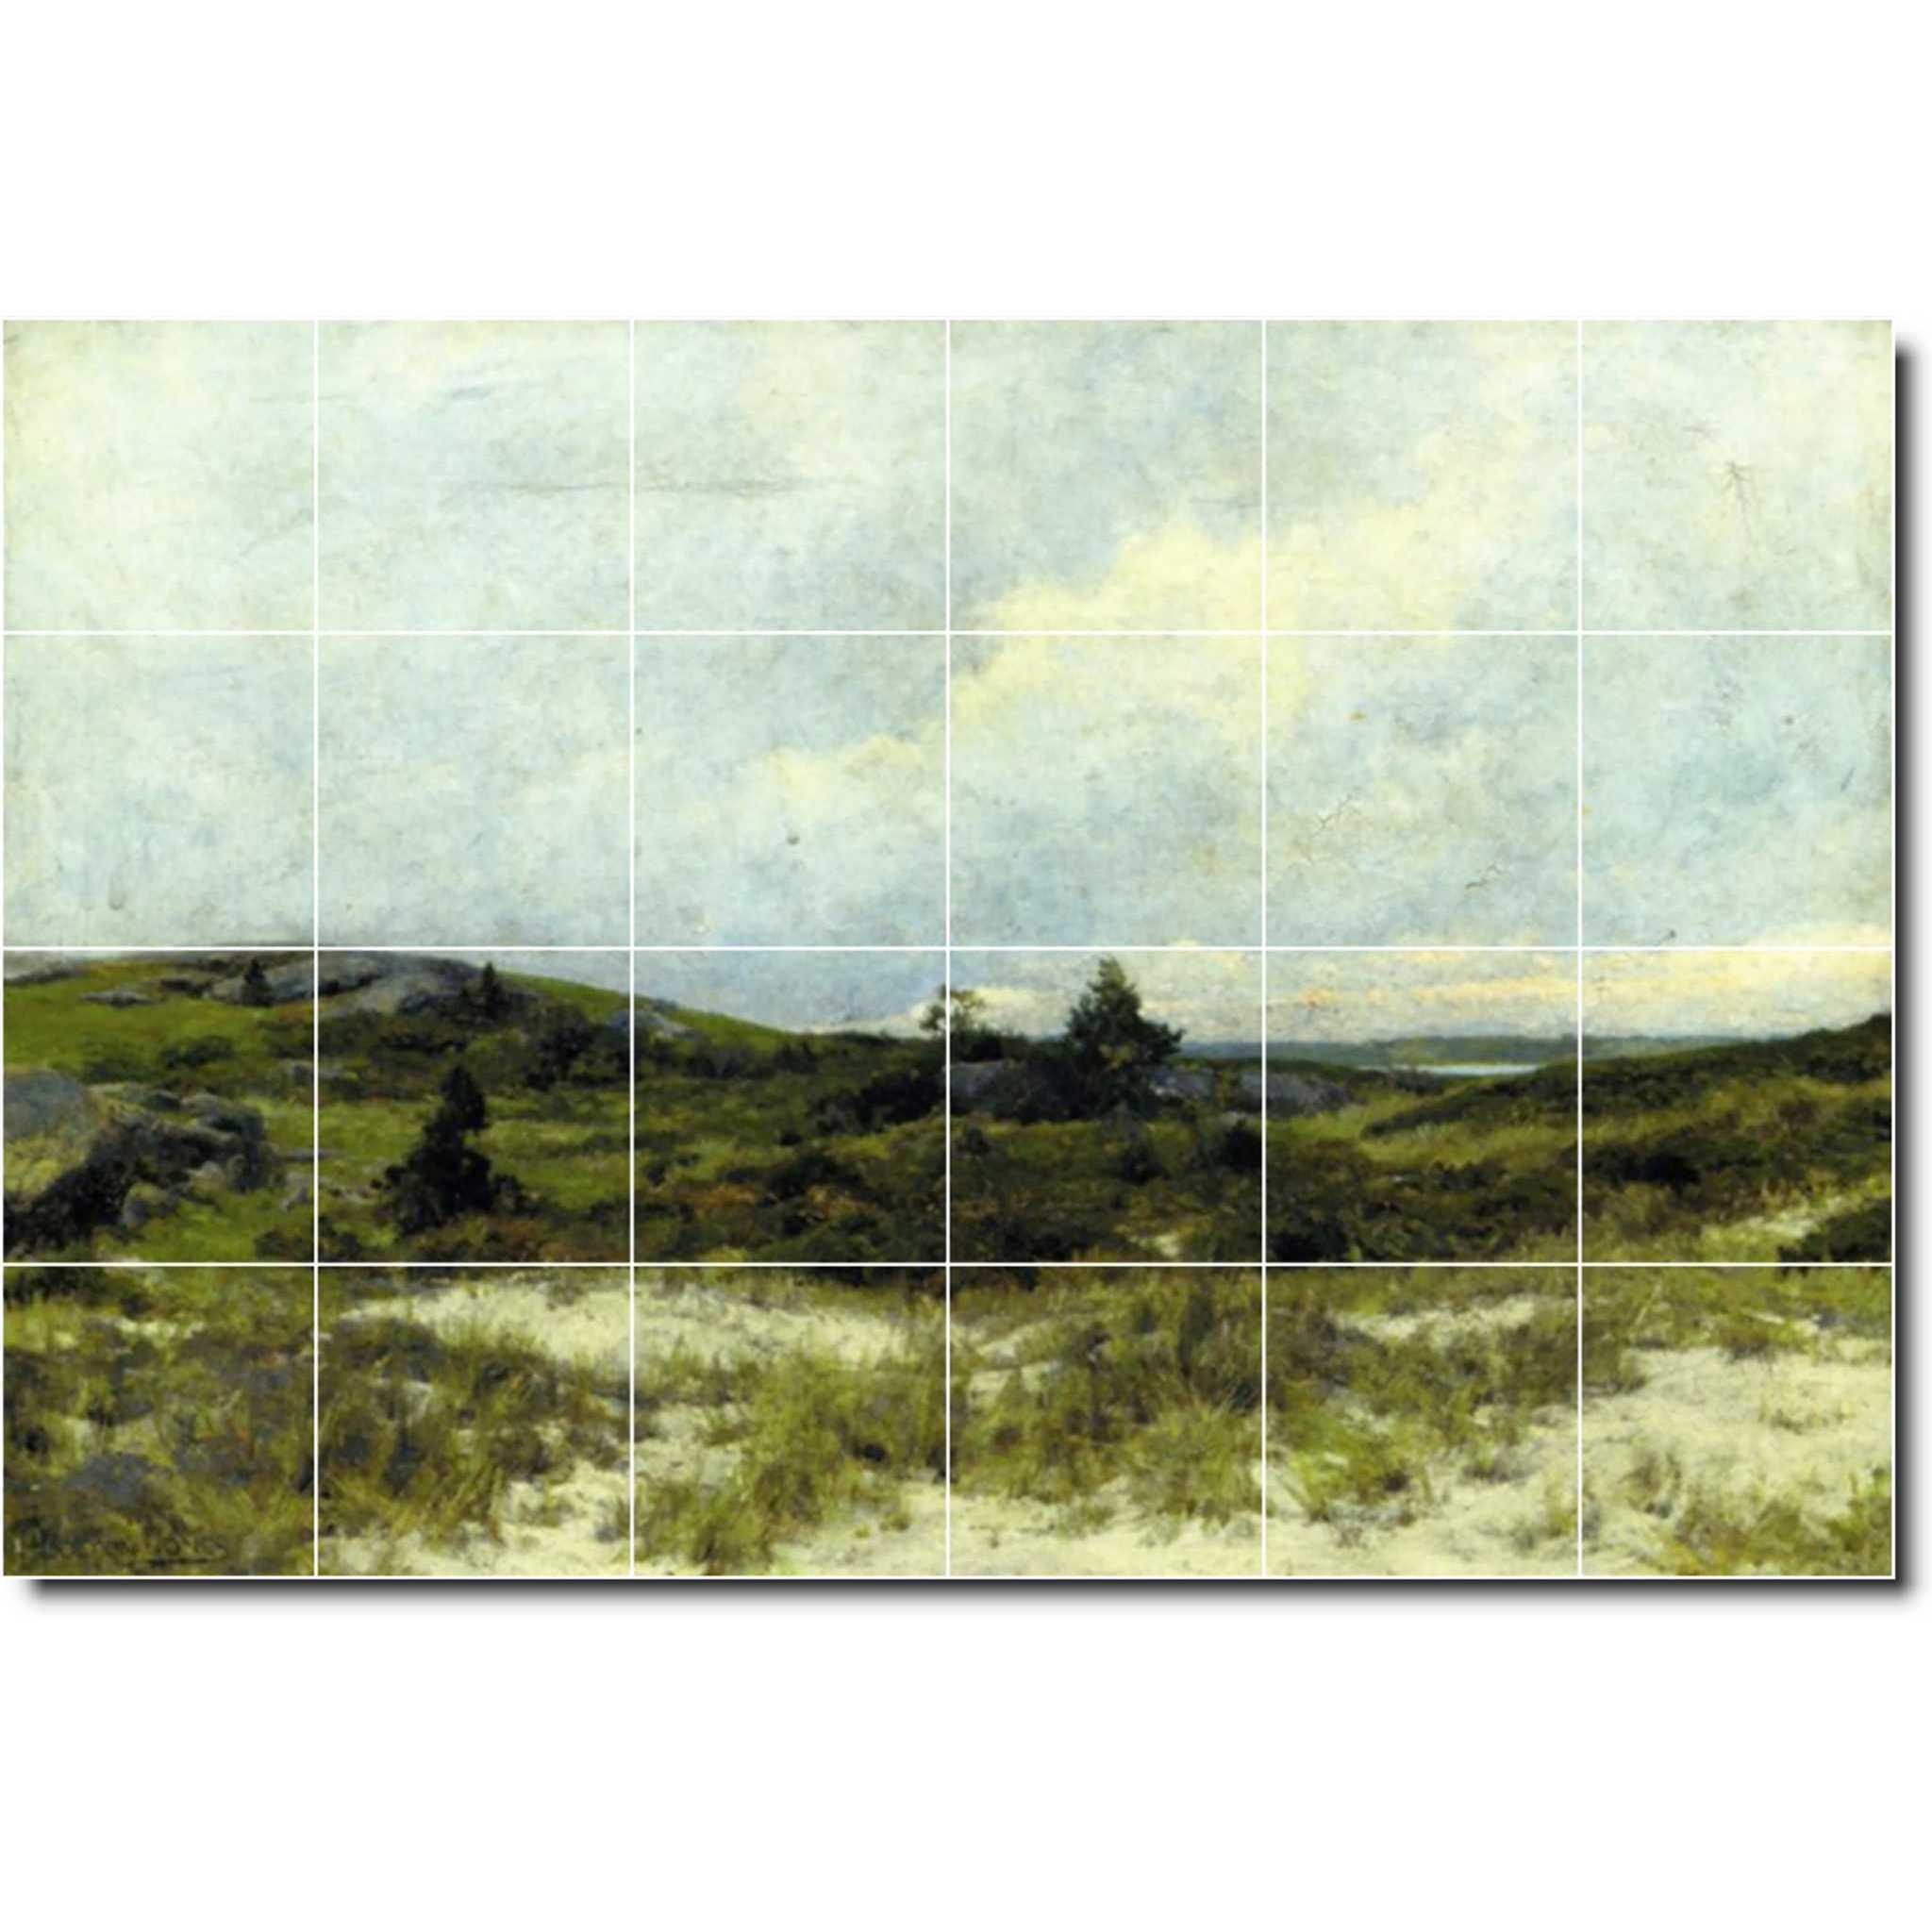 hugh bolton jones landscape painting ceramic tile mural p04891